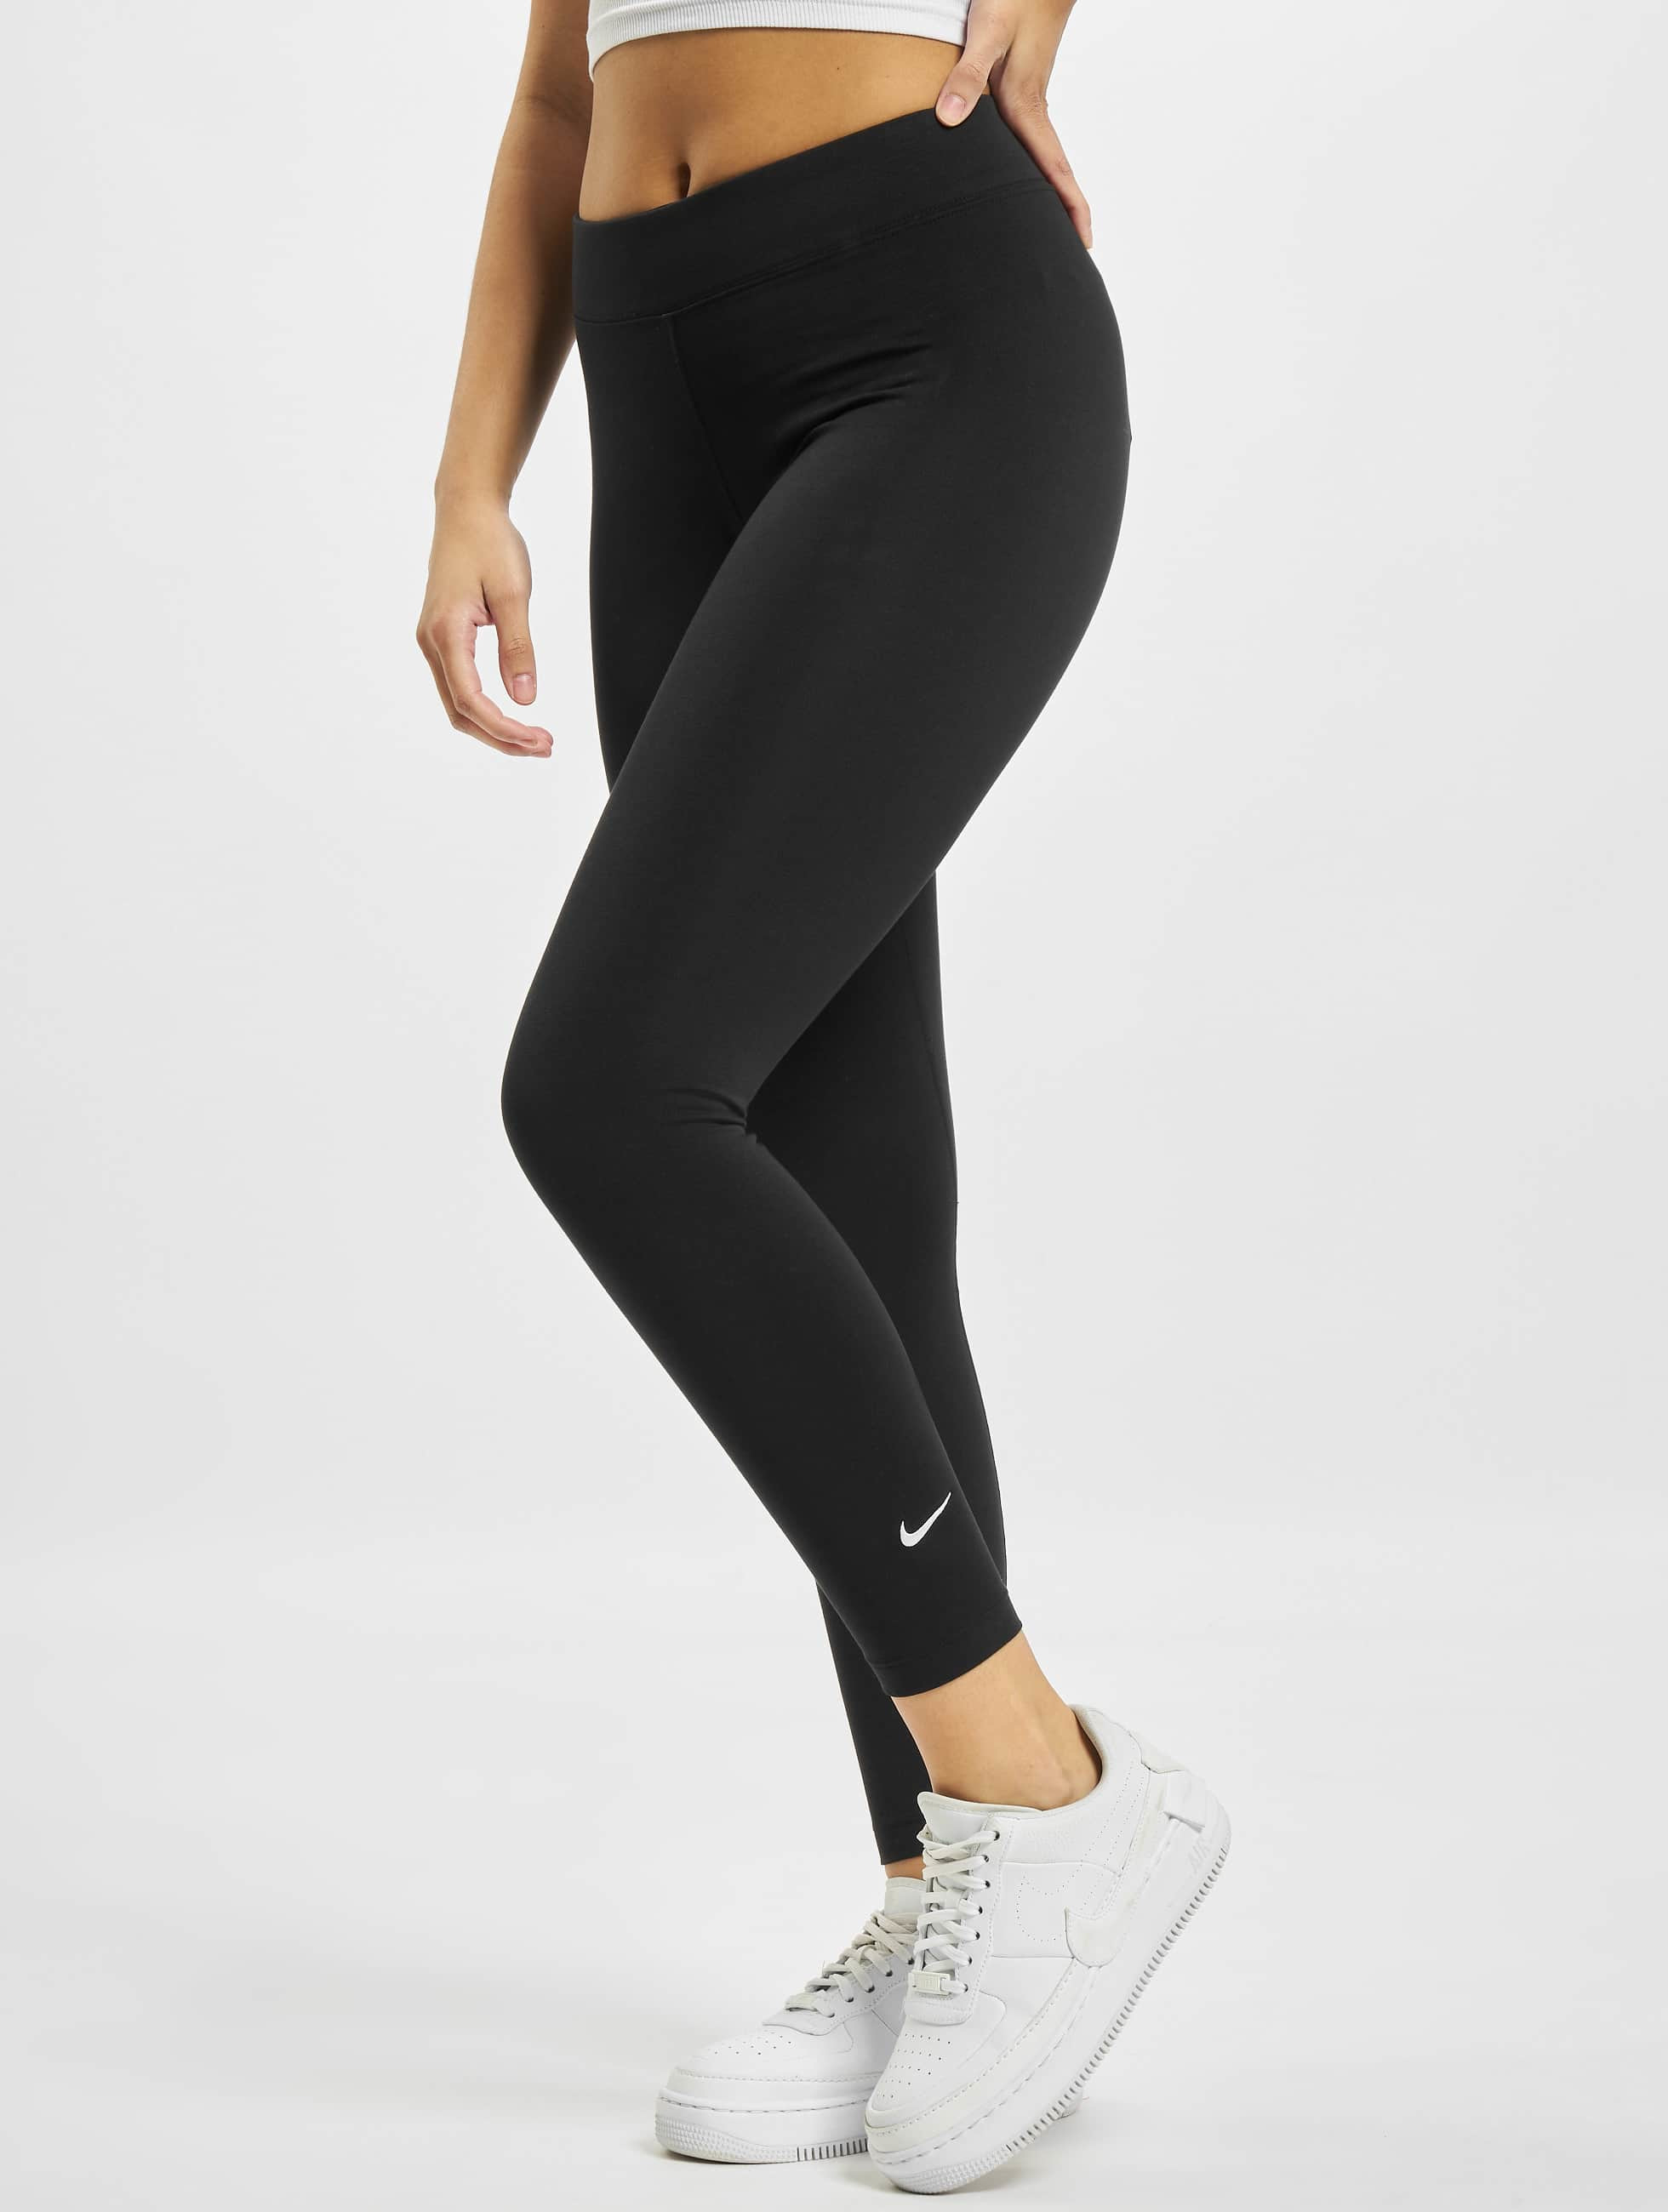 Espectador puño longitud Nike Pant / Legging/Tregging Nike Sportswear Essential 7/8 MR in black  806741